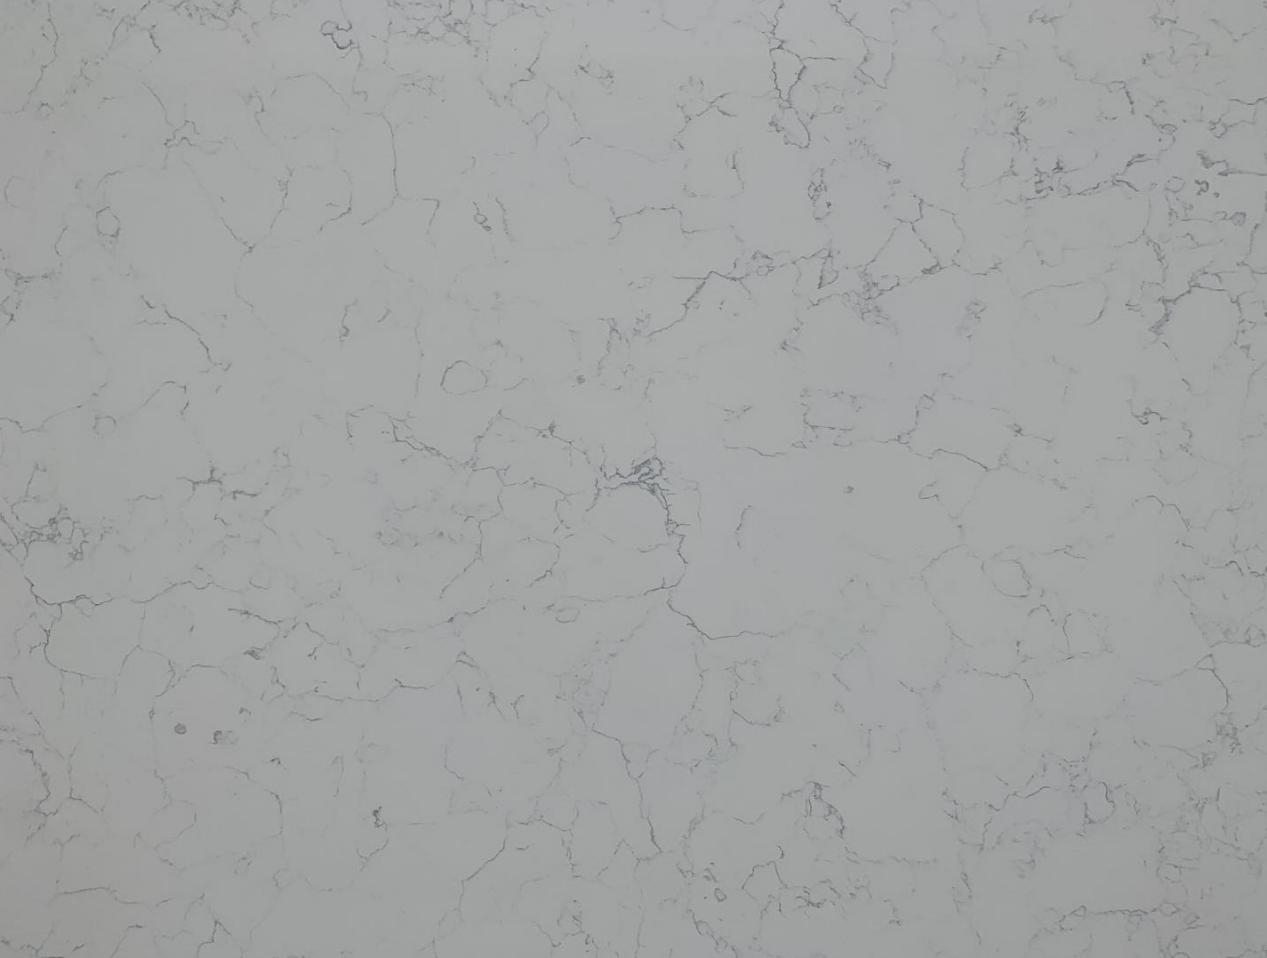 اسلب سنگ کوارتز سفید با ورید فوکولنت ریز سنگ مصنوعی نمای مرمر 4013-2